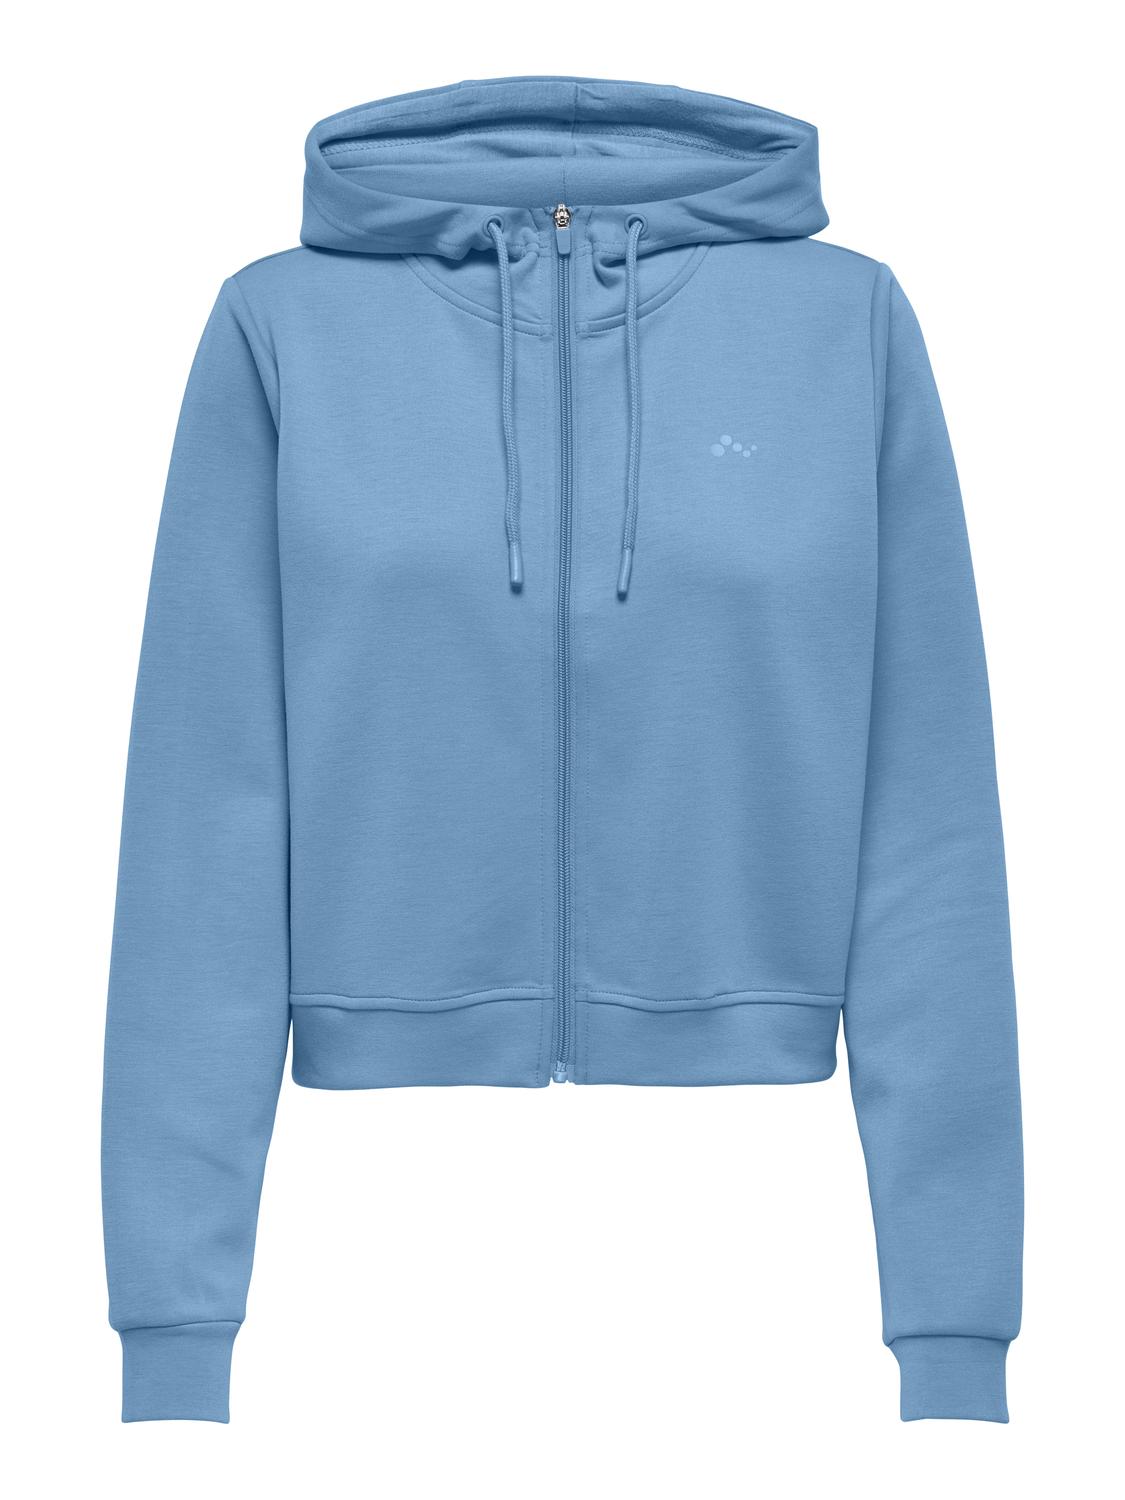 ONLY Loose Fit Hoodie Sweatshirt -Blissful Blue - 15283439